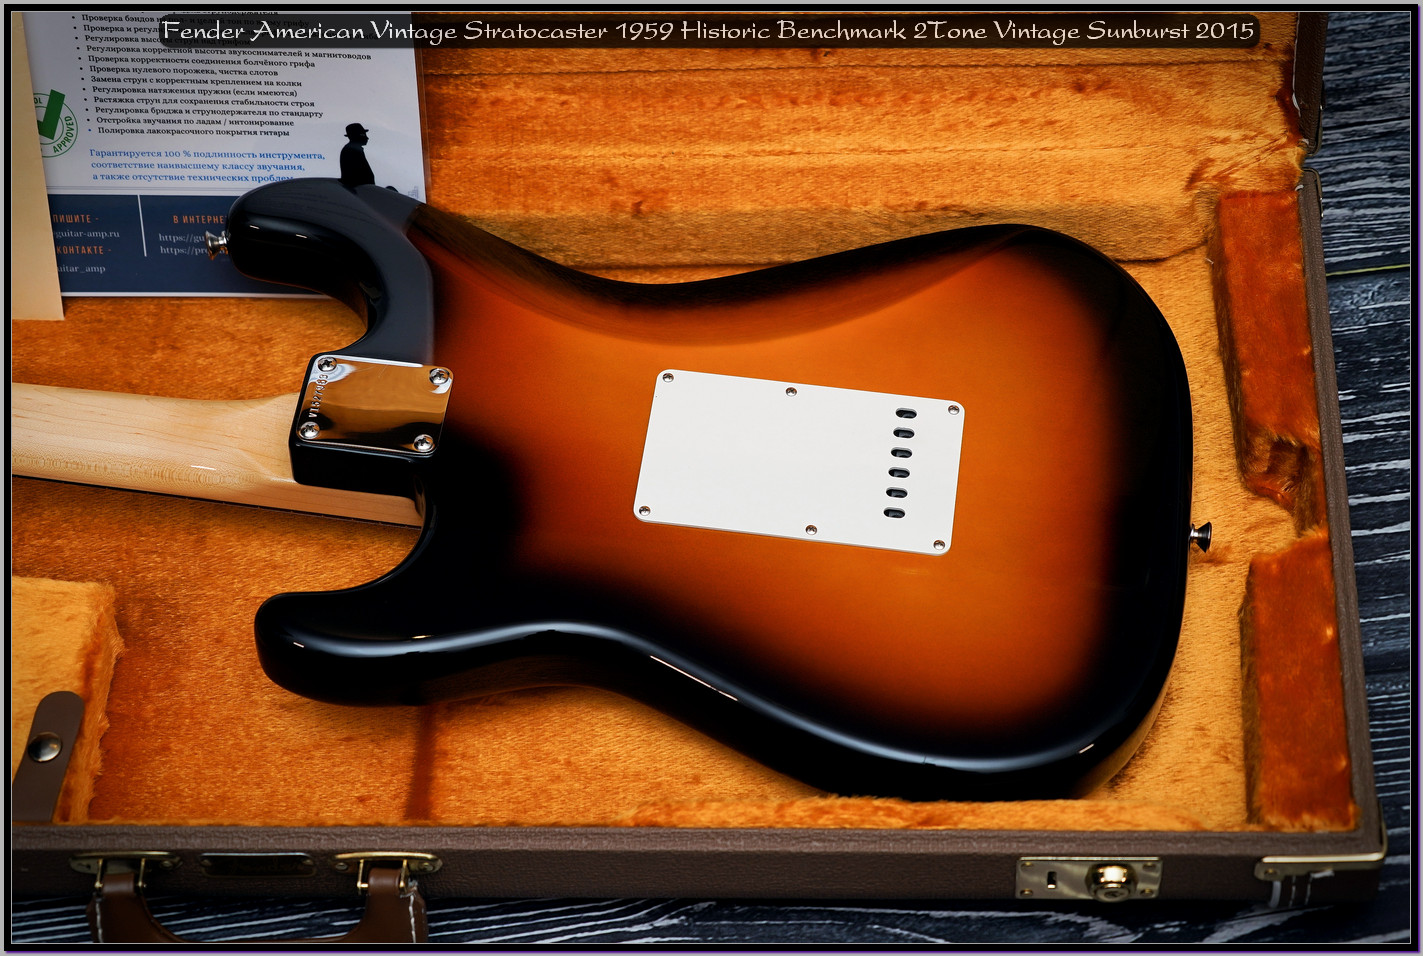 Fender American Vintage Stratocaster 1959 Historic Benchmark 2Tone Vintage Sunburst 2015 16_x1400.jpg